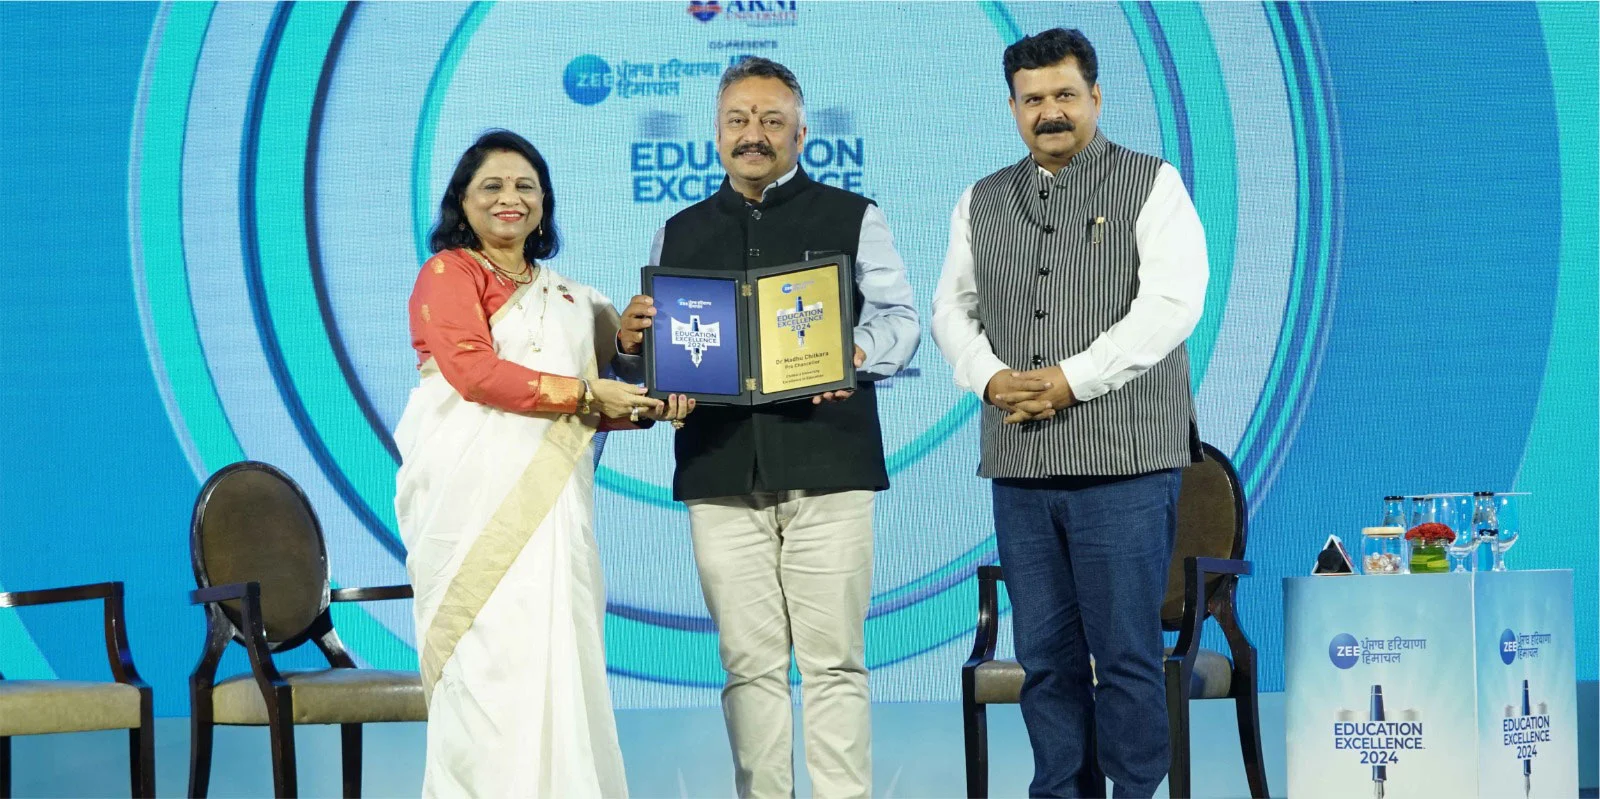 Dr. Madhu Chitkara Honoured for Lifelong Commitment to Education